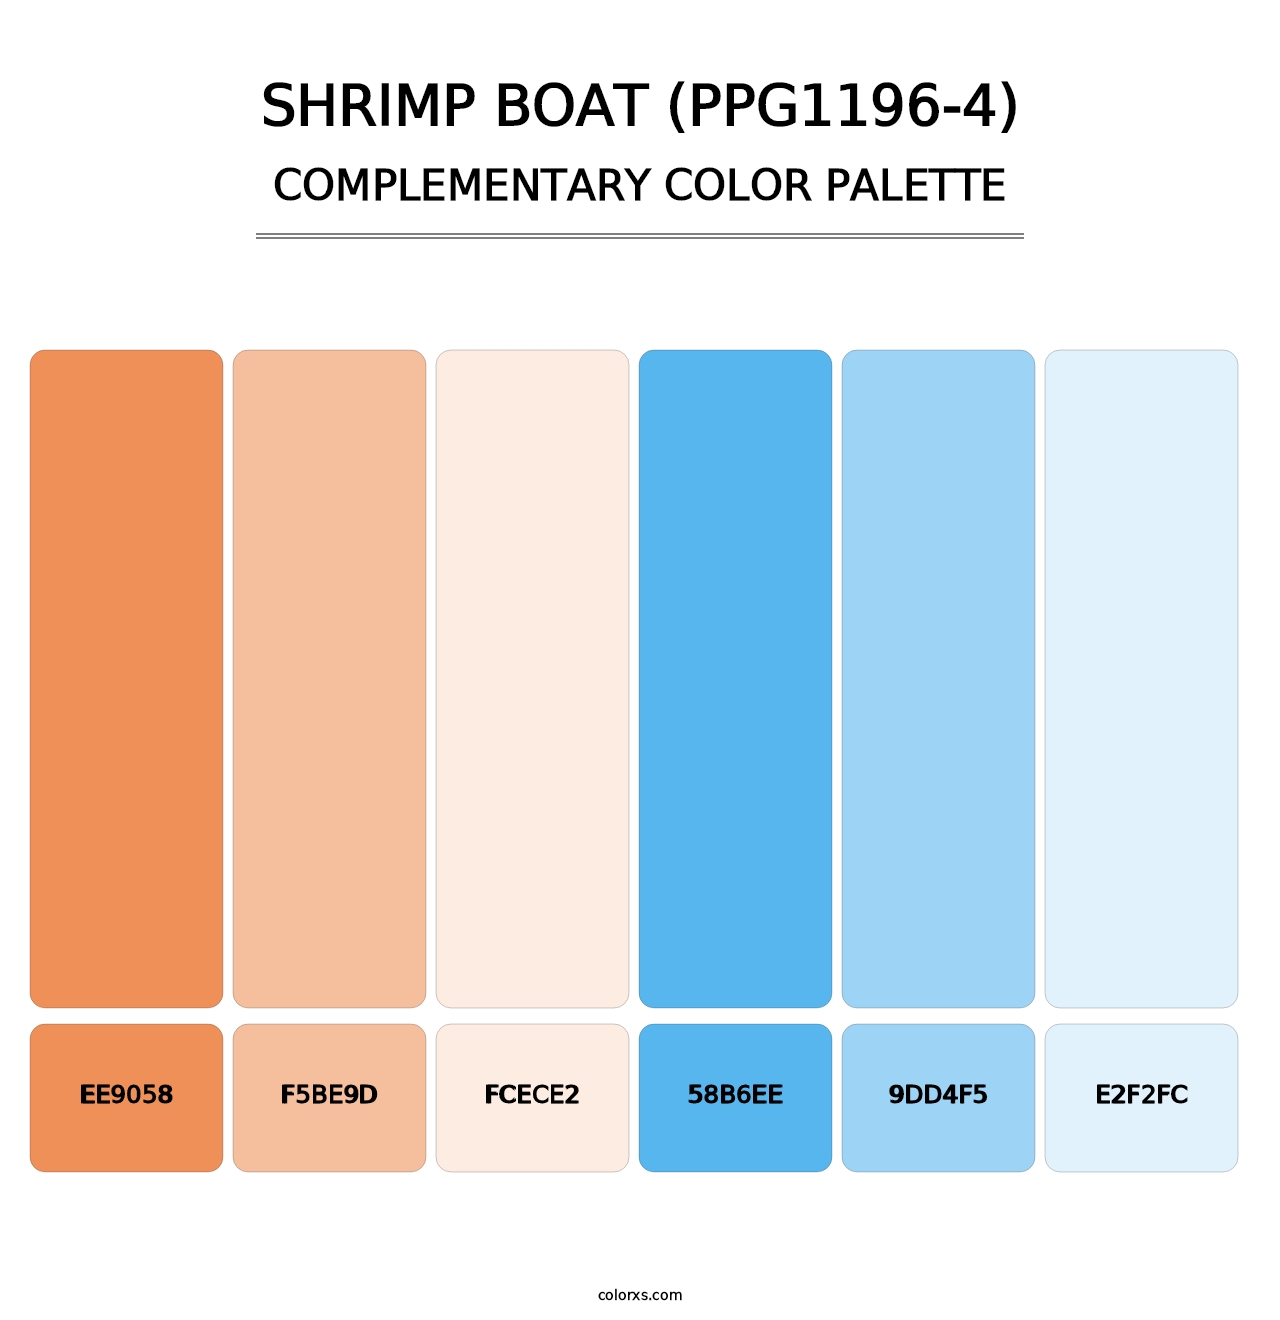 Shrimp Boat (PPG1196-4) - Complementary Color Palette